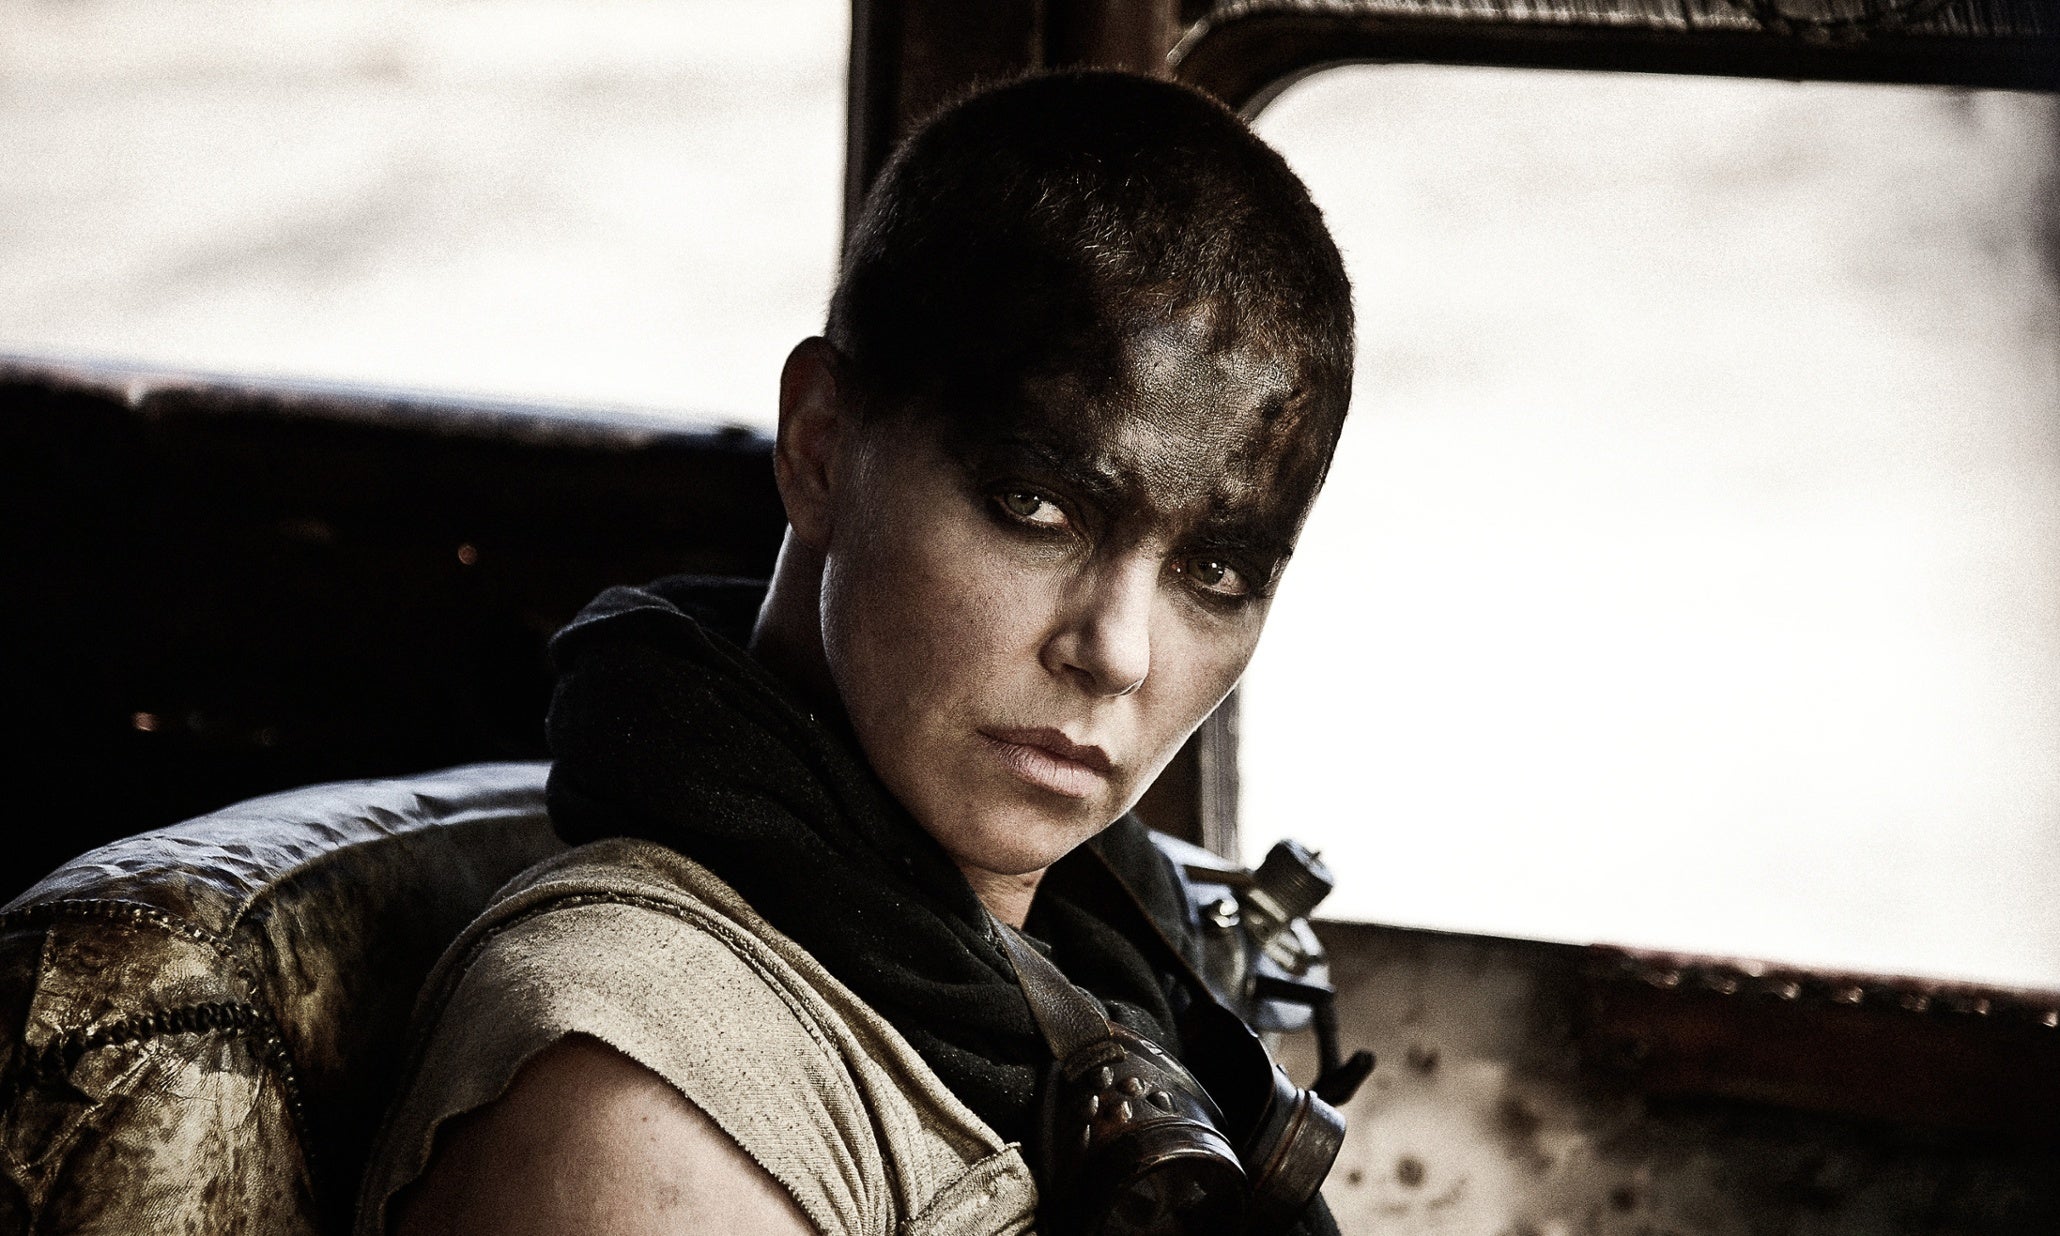 Road warrior: Theron as Furiosa in 'Mad Max: Fury Road'